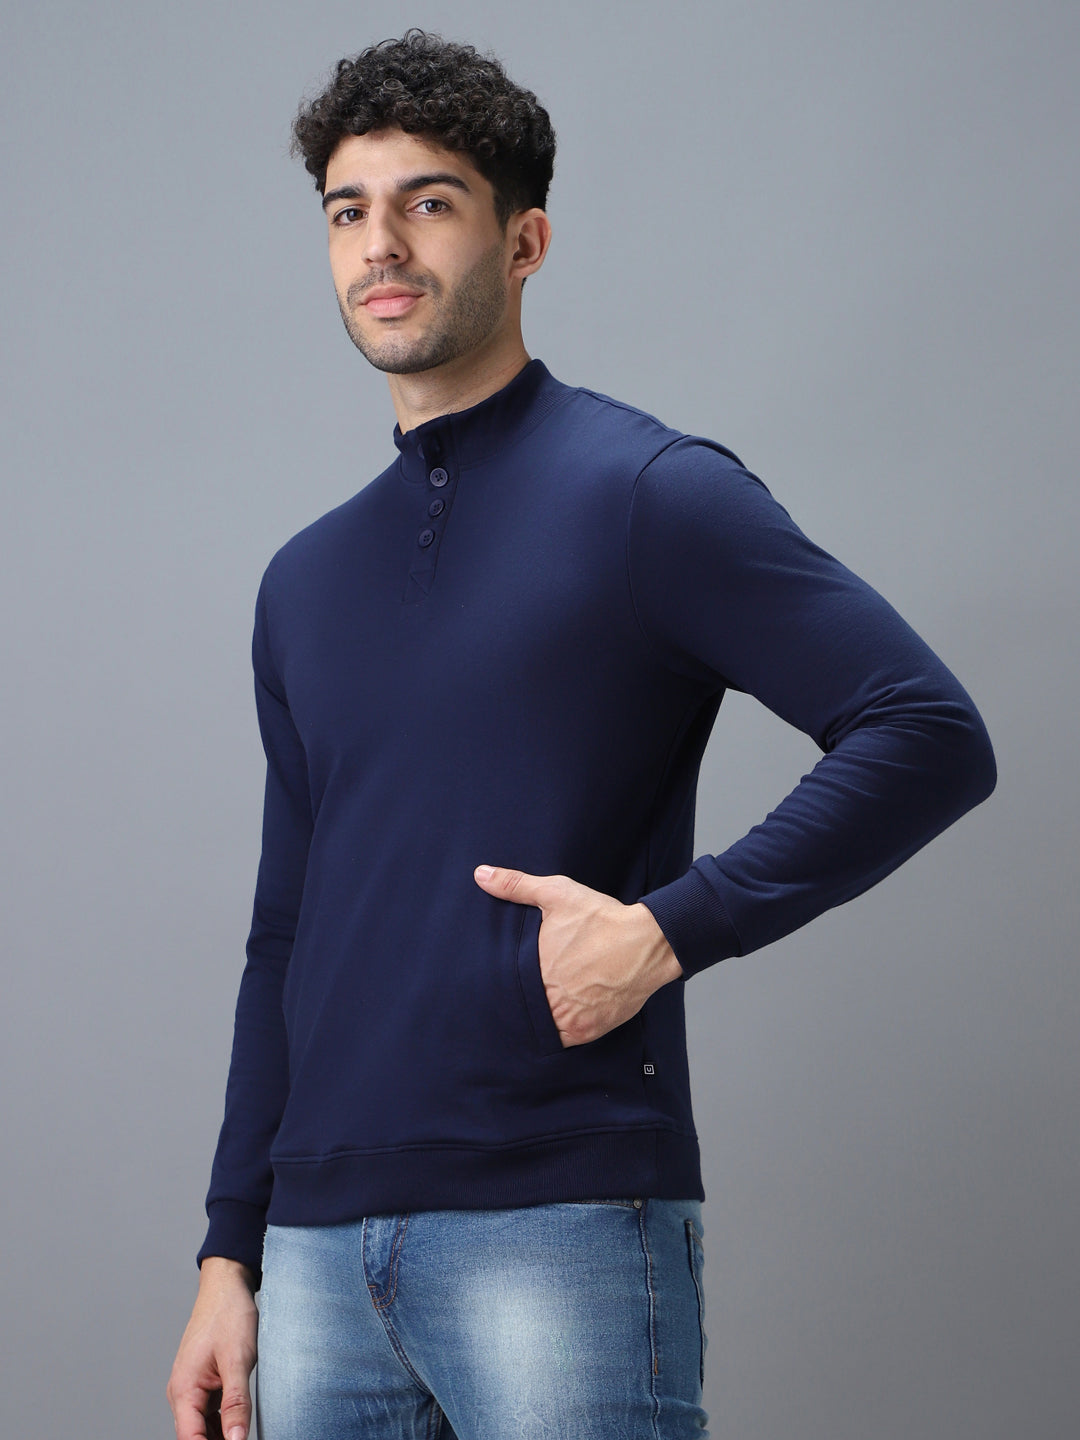 Men's Blue Cotton Solid Button High Neck Sweatshirt